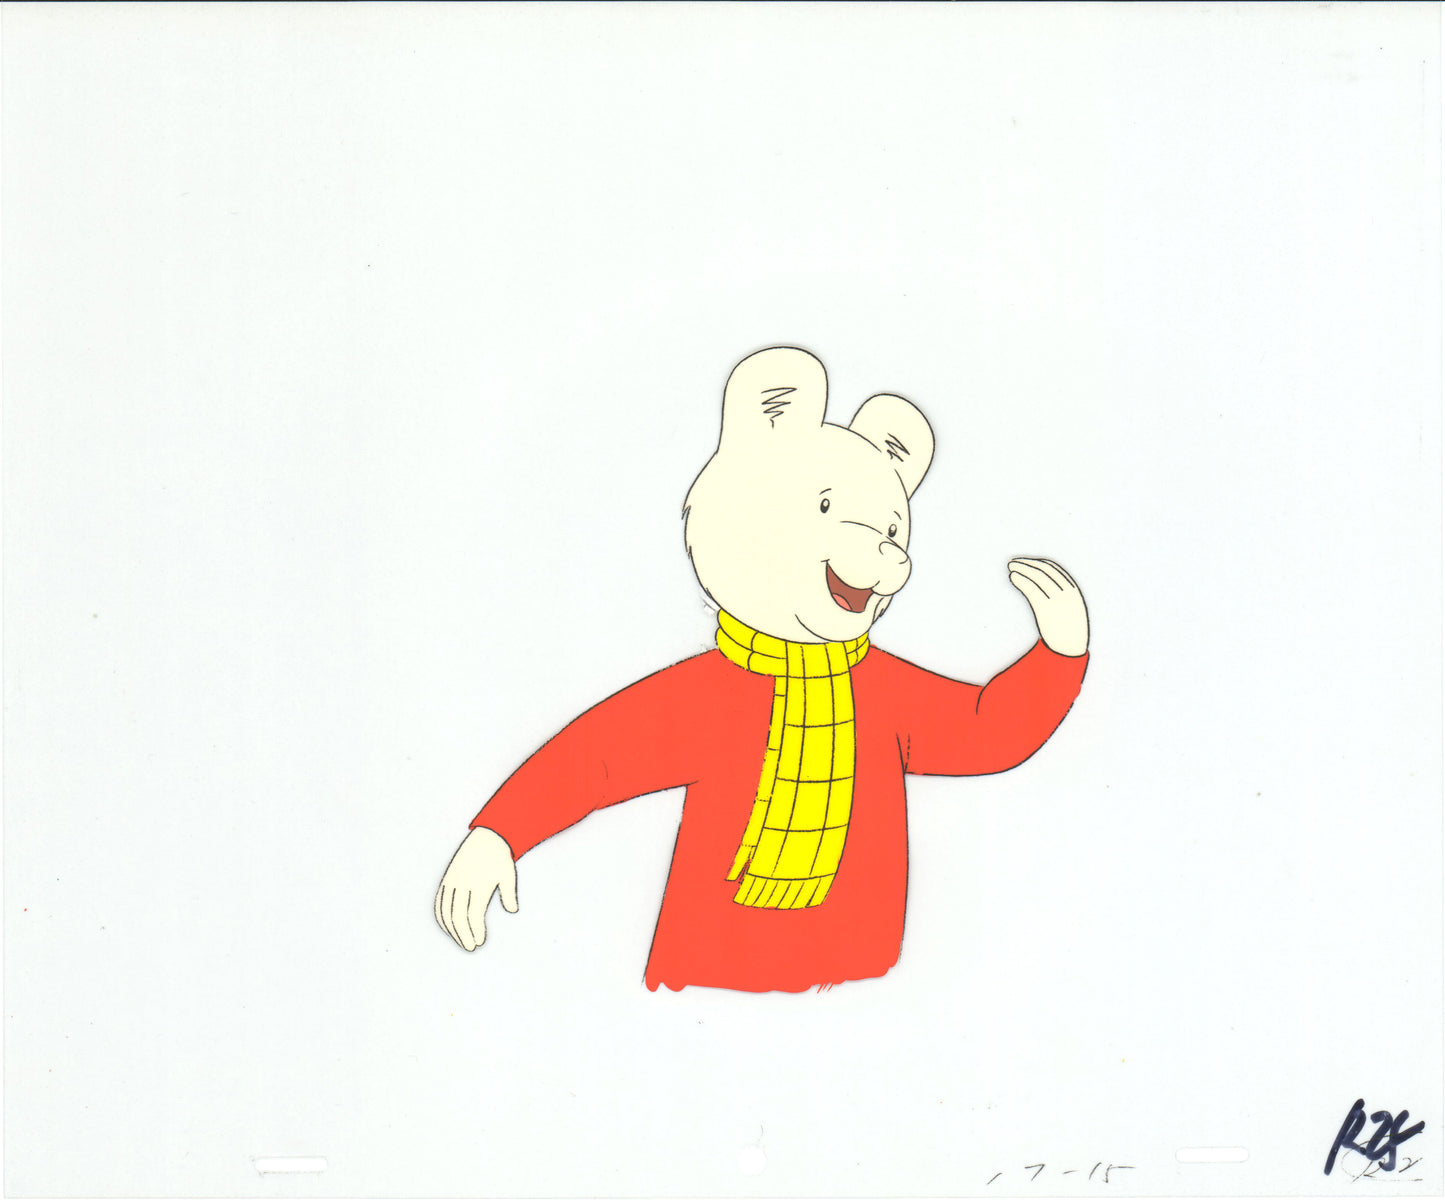 RUPERT Bear Original Production Animation Cel from the Cartoon by Nelvana Tourtel Animation 1990s 8-202